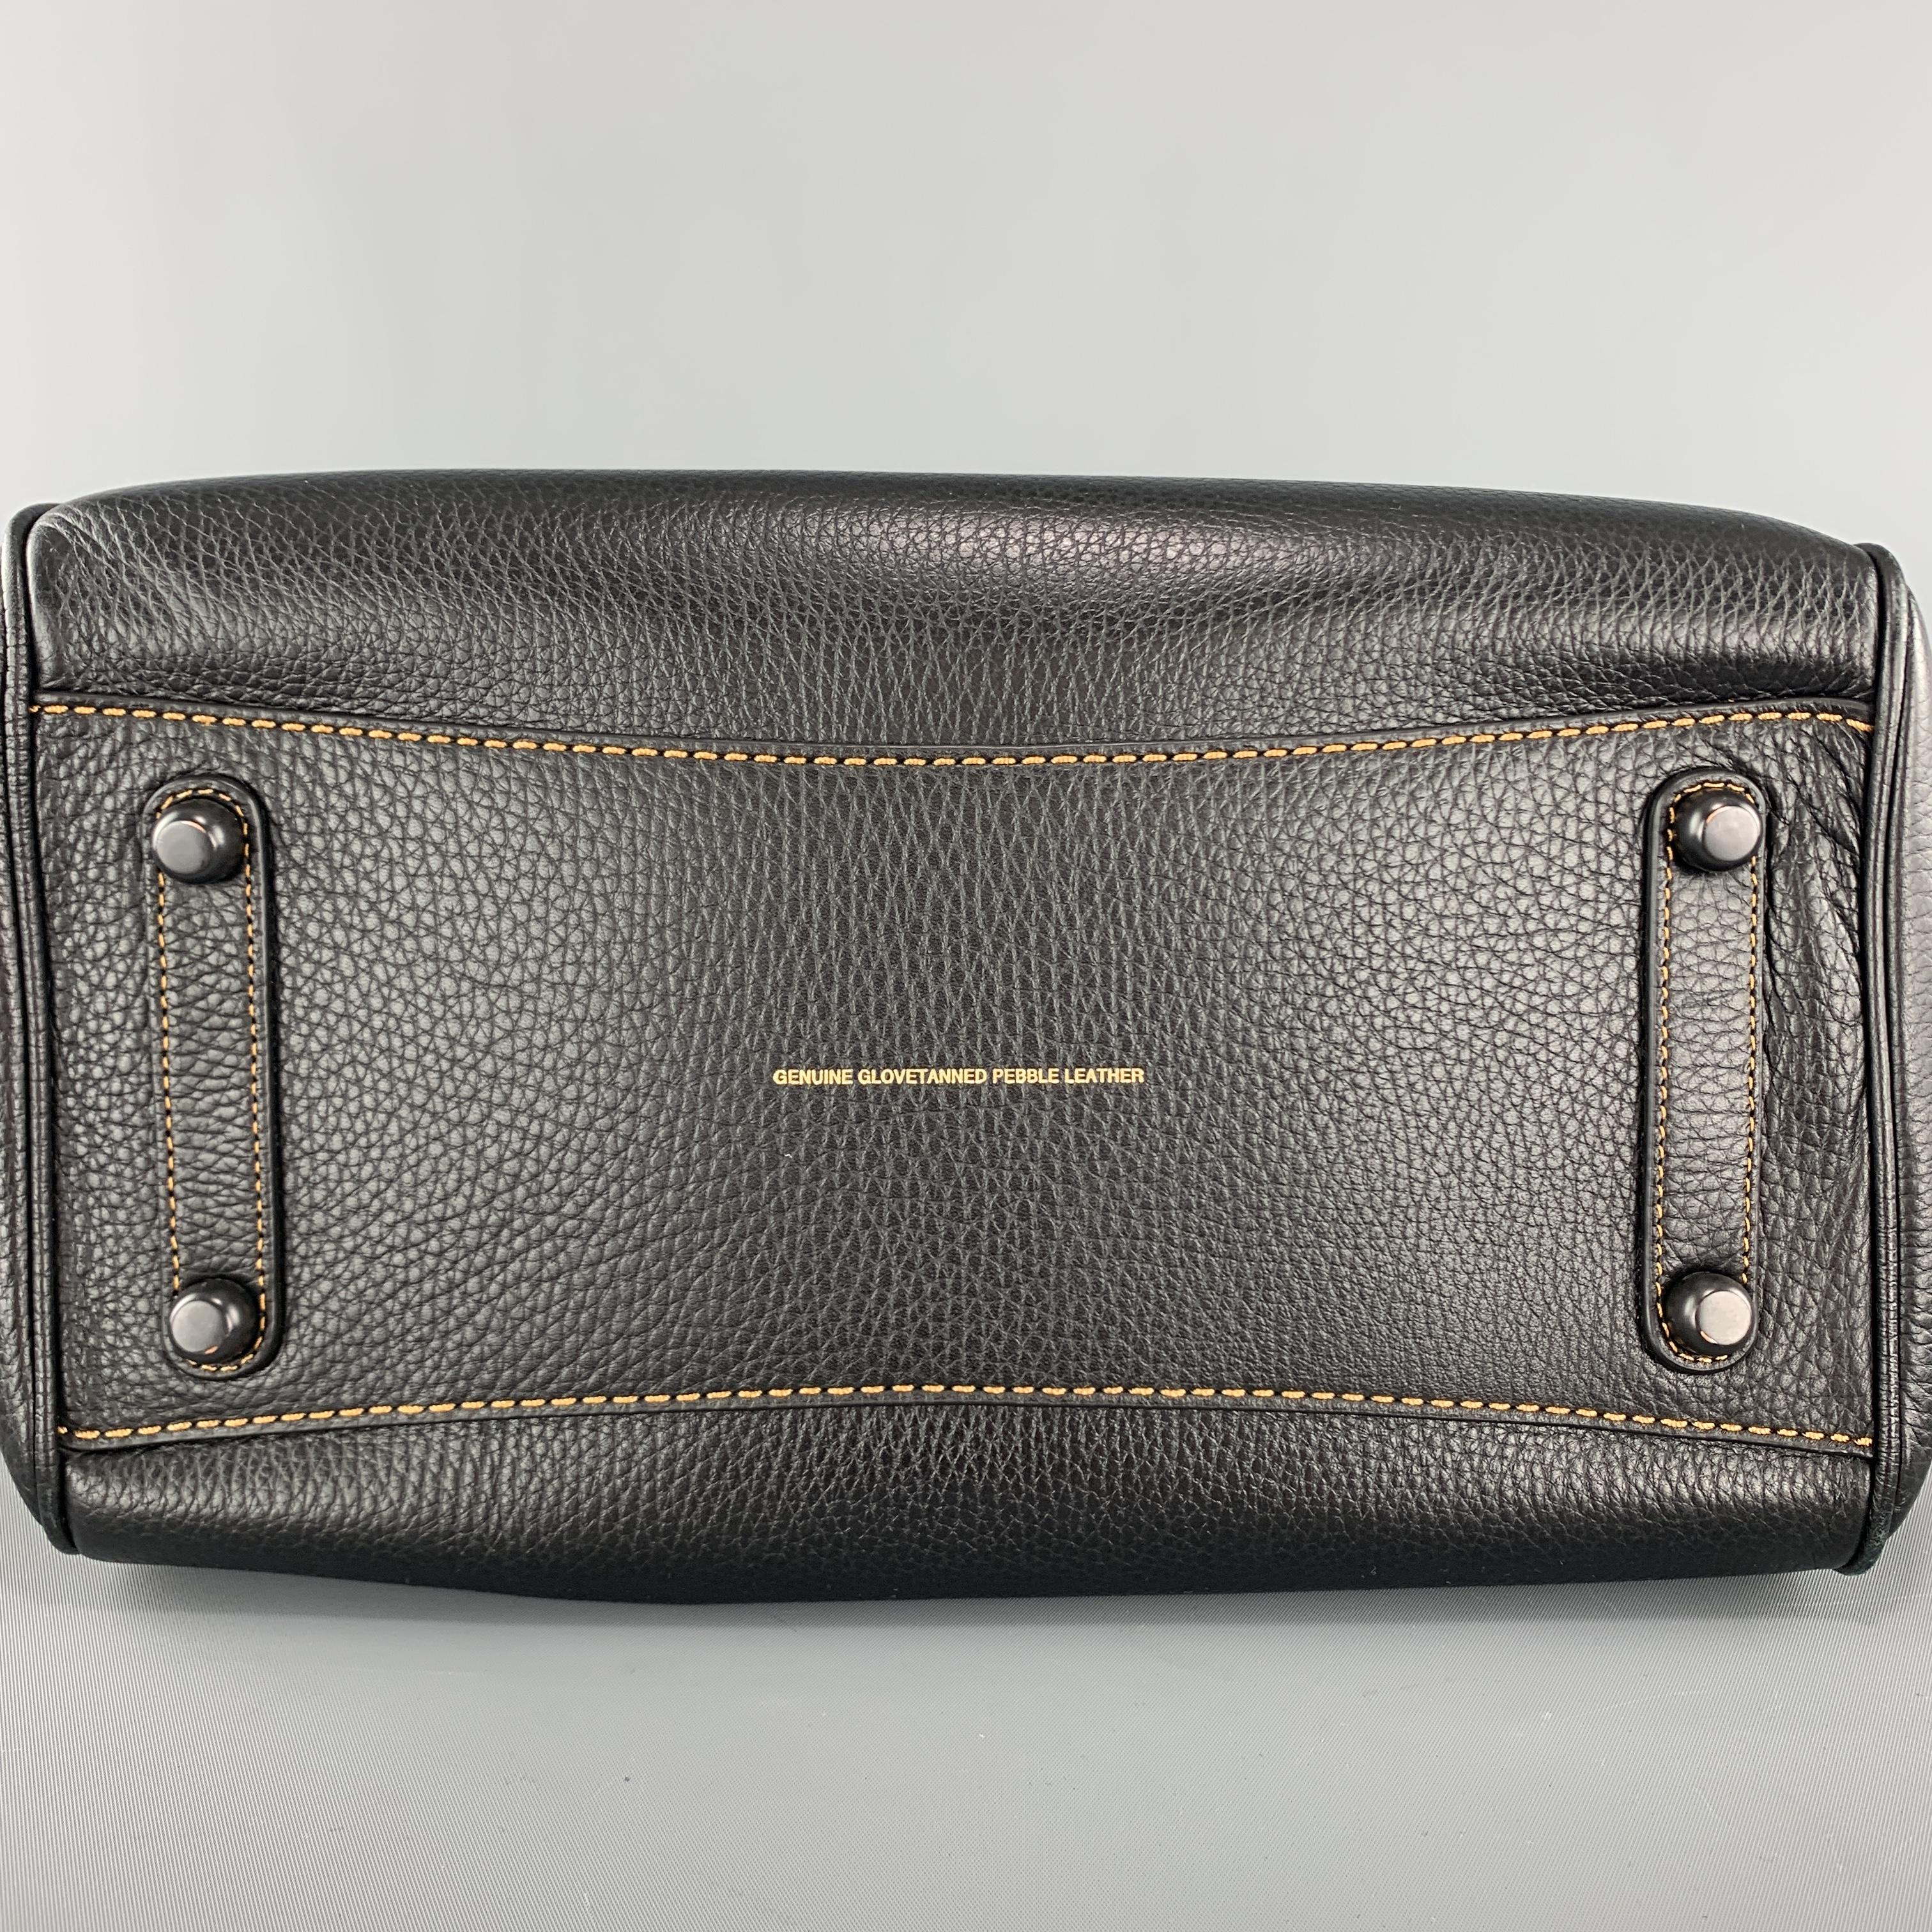 COACH Black Pebbled Leather Contrast Stitch Top Handles Bag 1